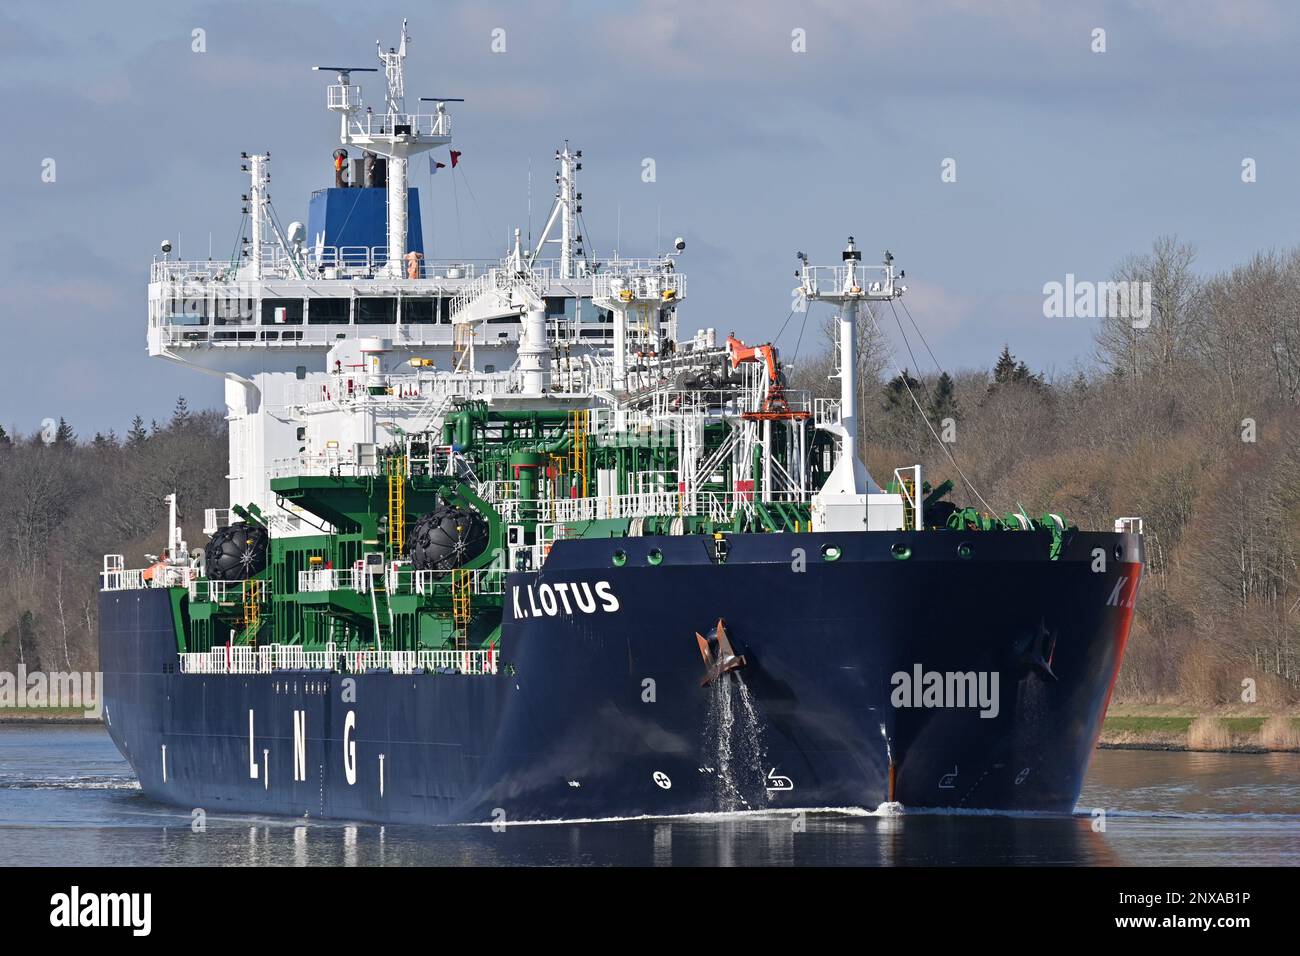 LNGBunkering Tanker K. LOTUS at the Kiel Canal Stock Photo